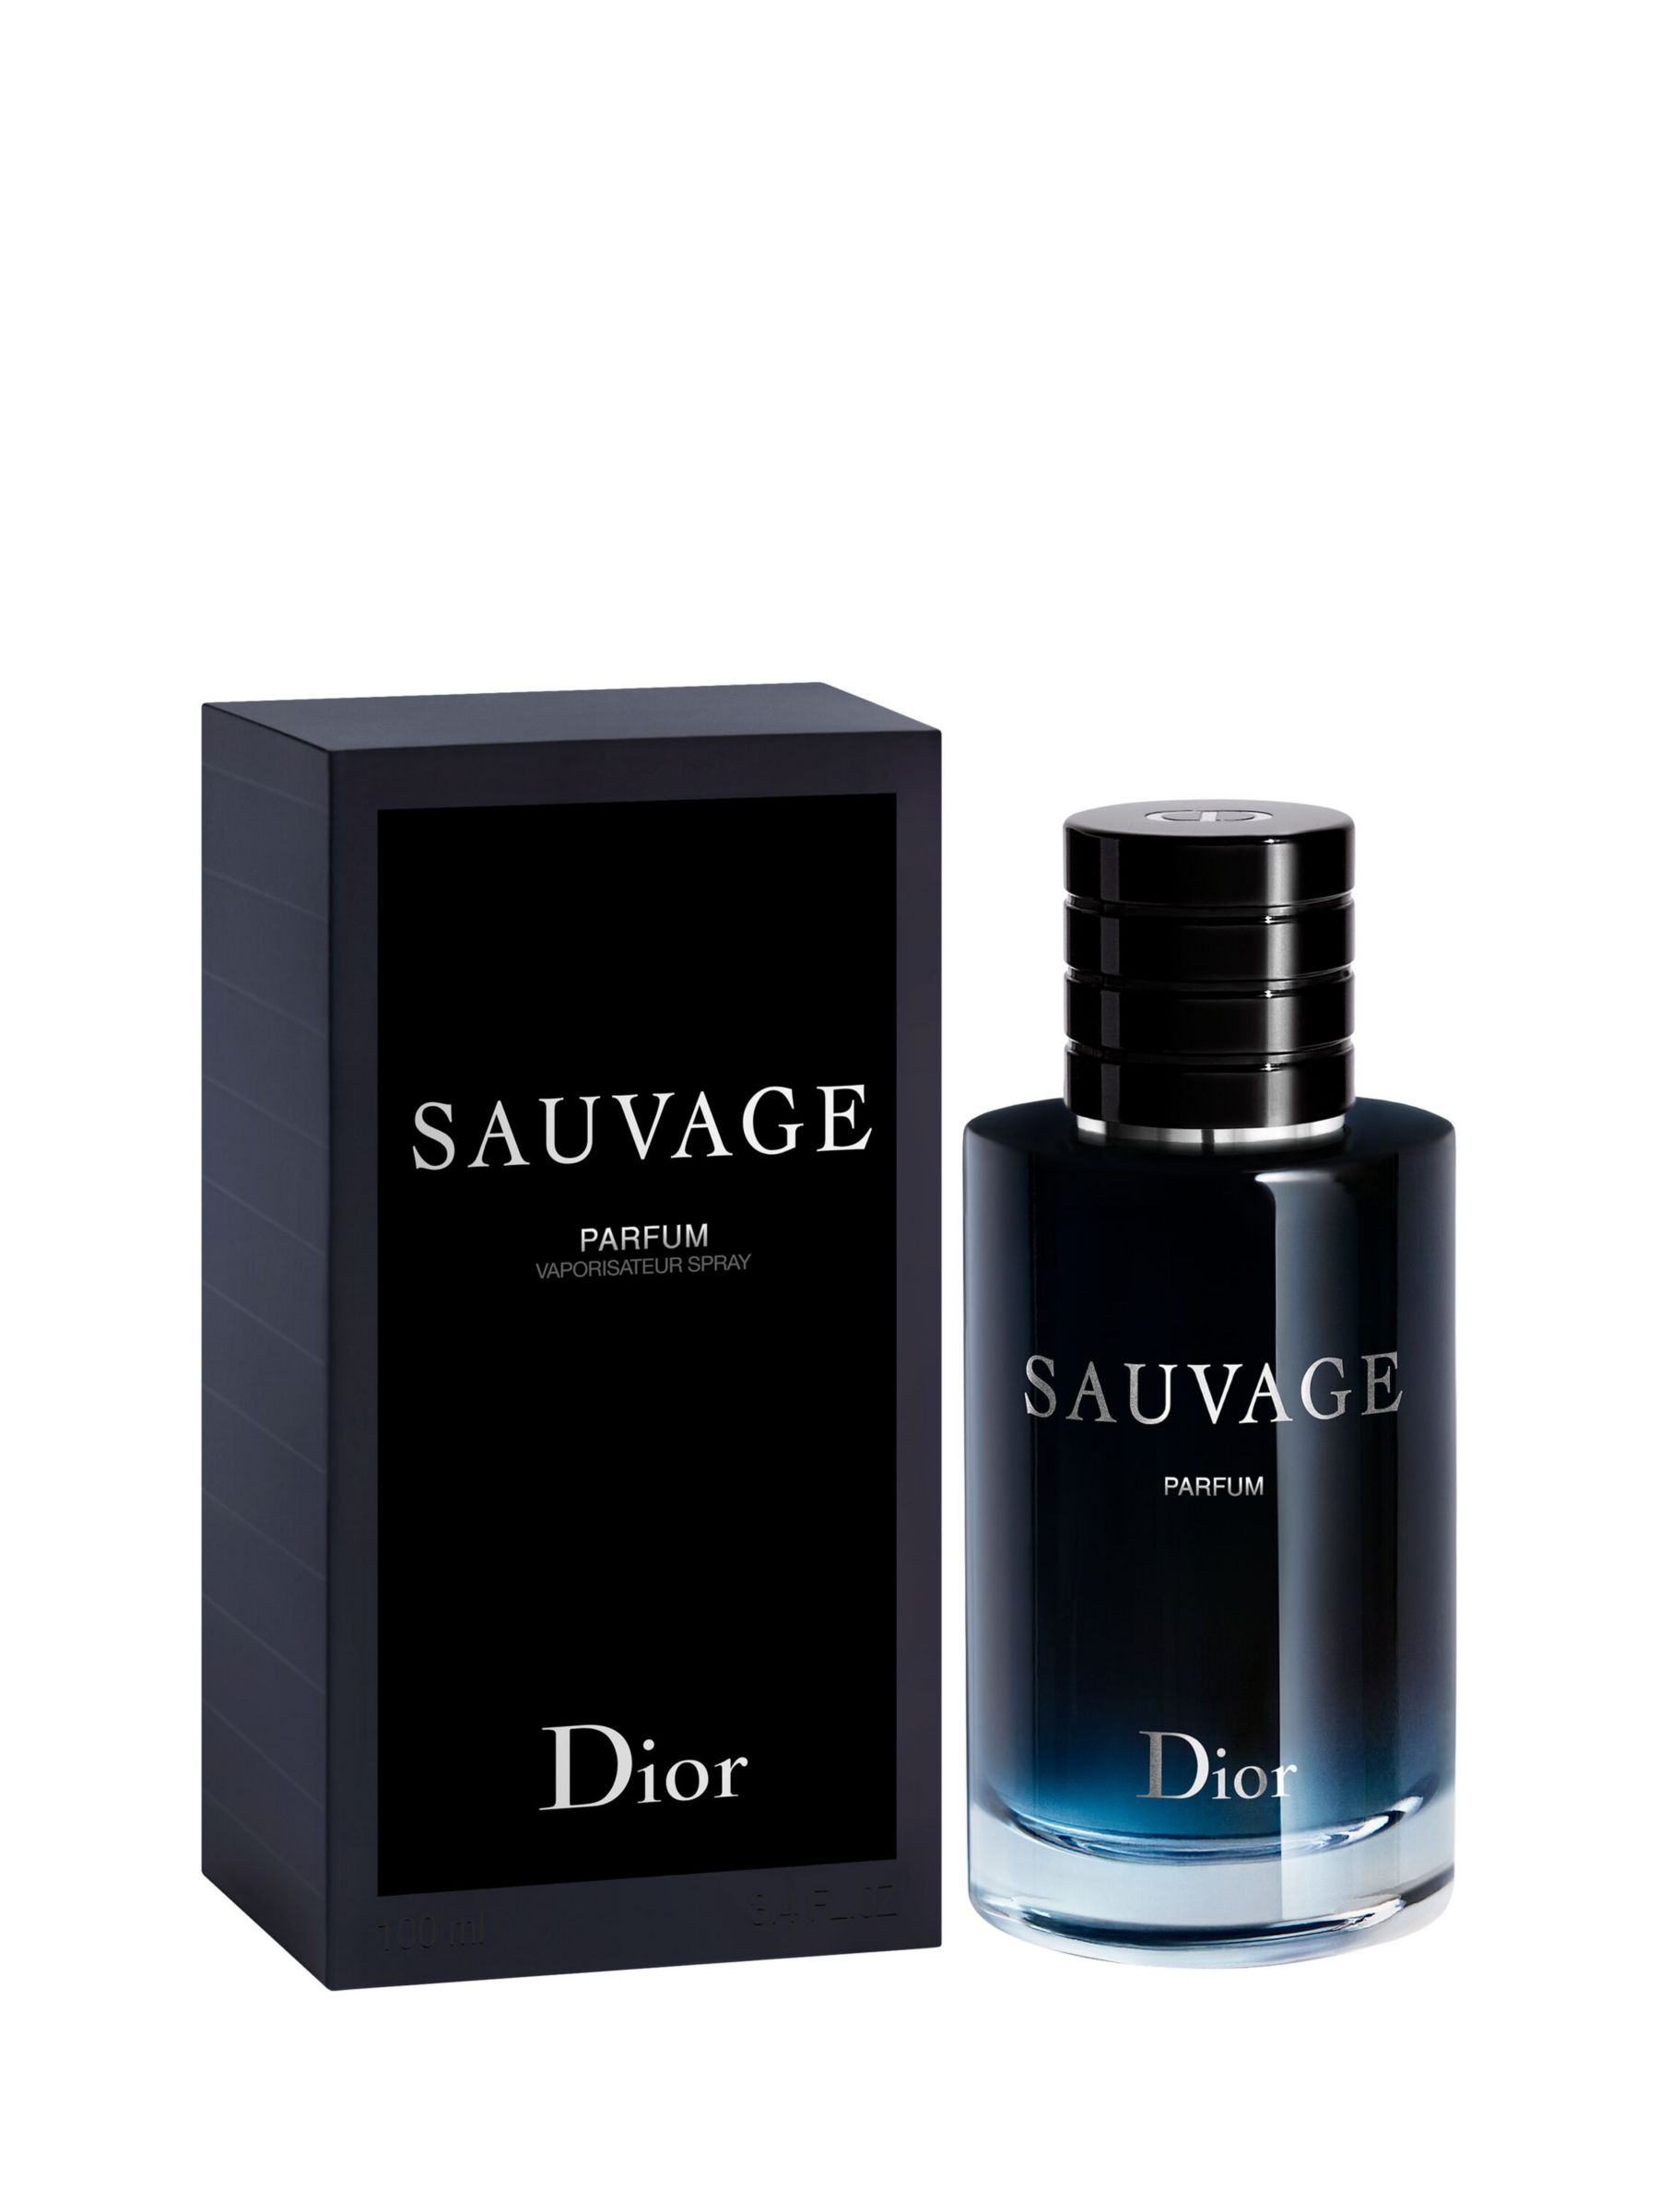 sauvage perfume shop